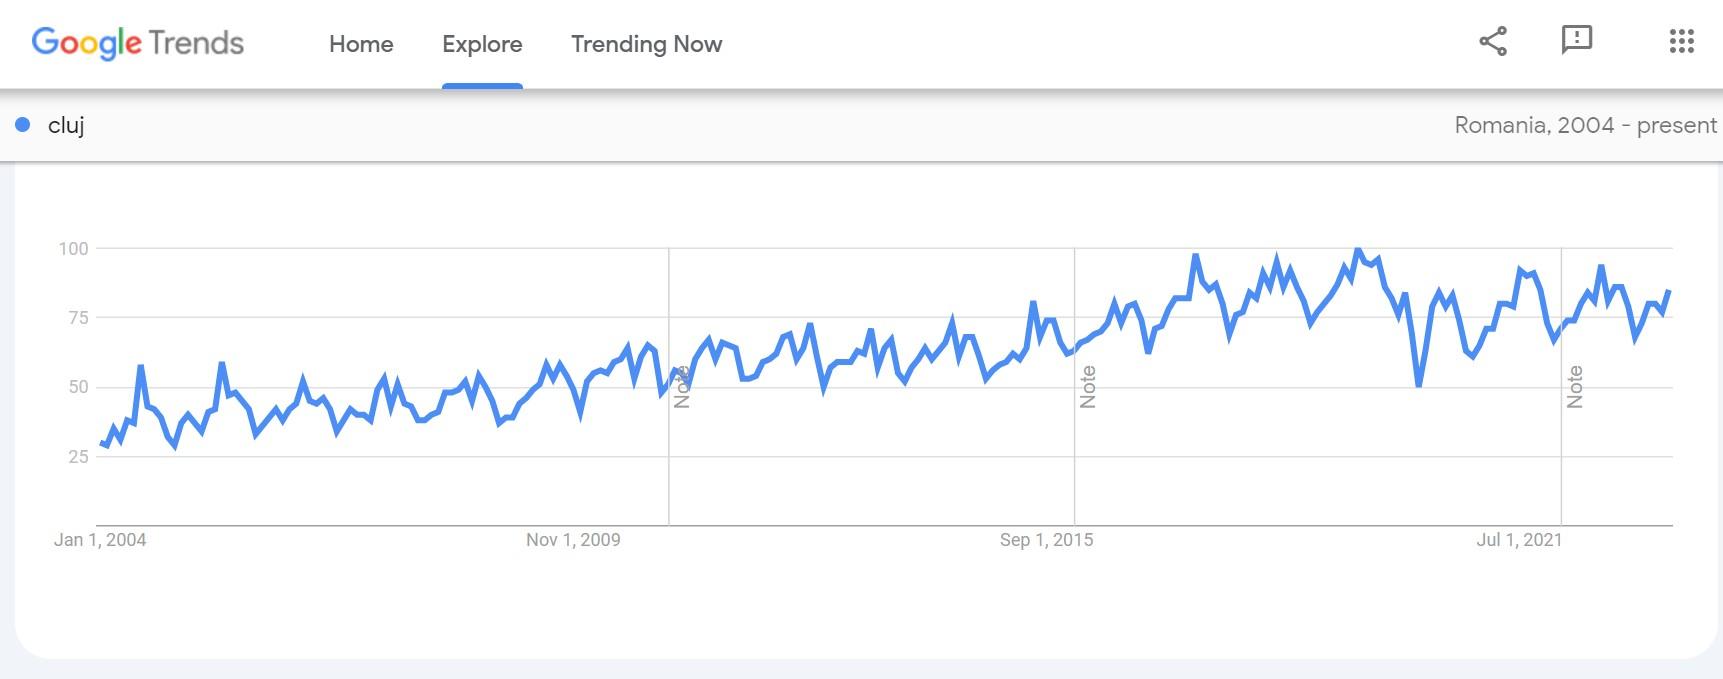 cluj-google-trends.jpg